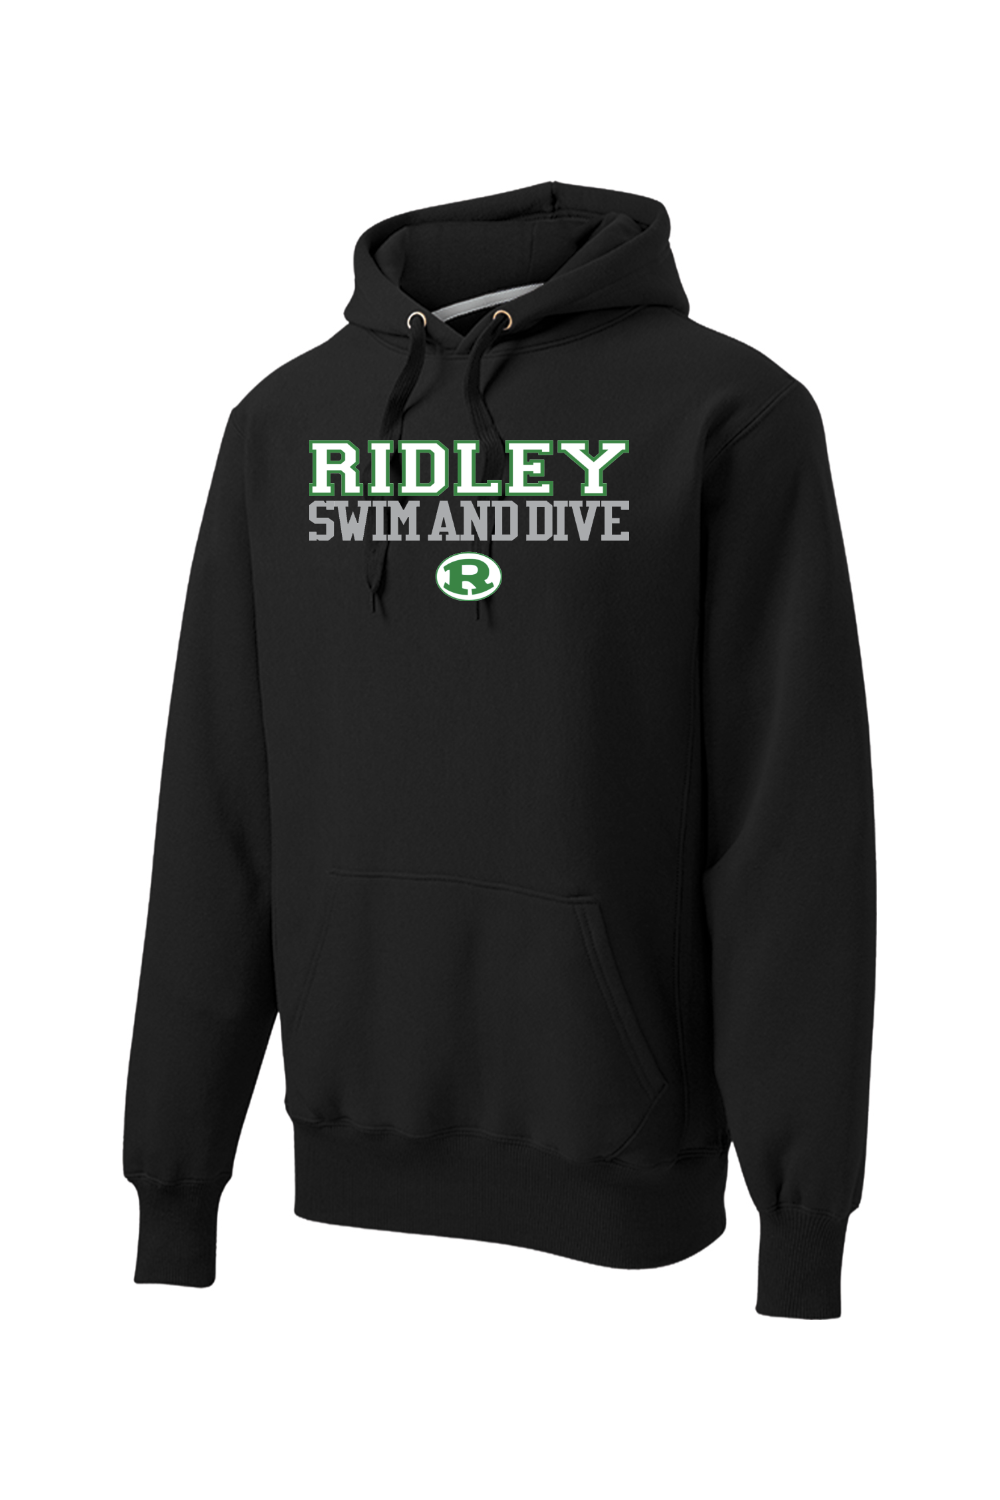 Ridley Swim and Dive Sport-Tek Super Heavyweight Pullover Hooded Sweatshirt